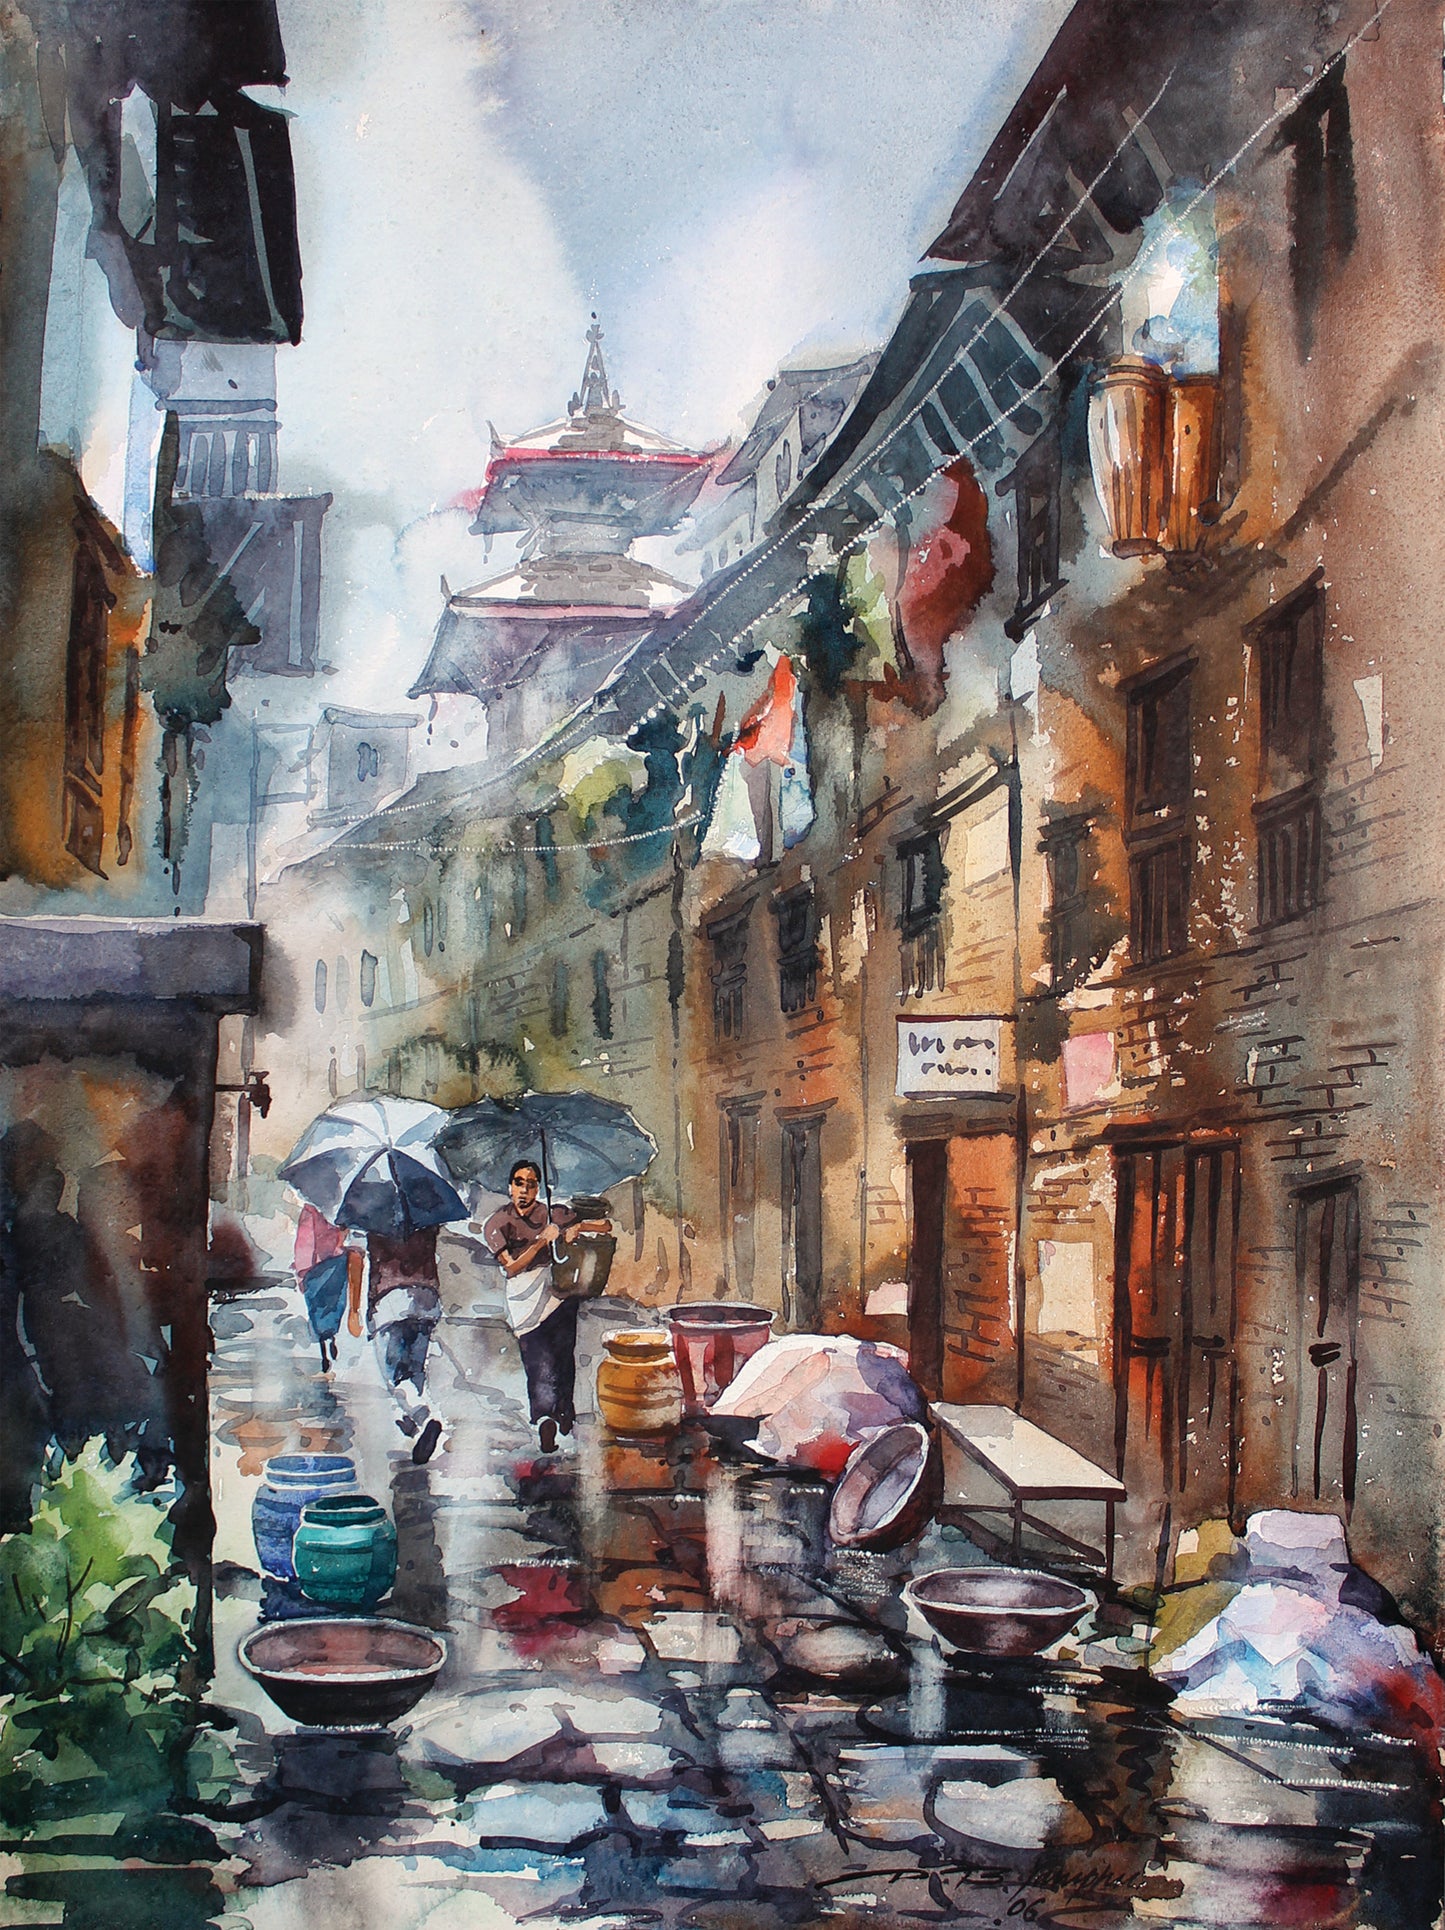 Art Print - Rainy season, street scene from Kathmandu, Nepal